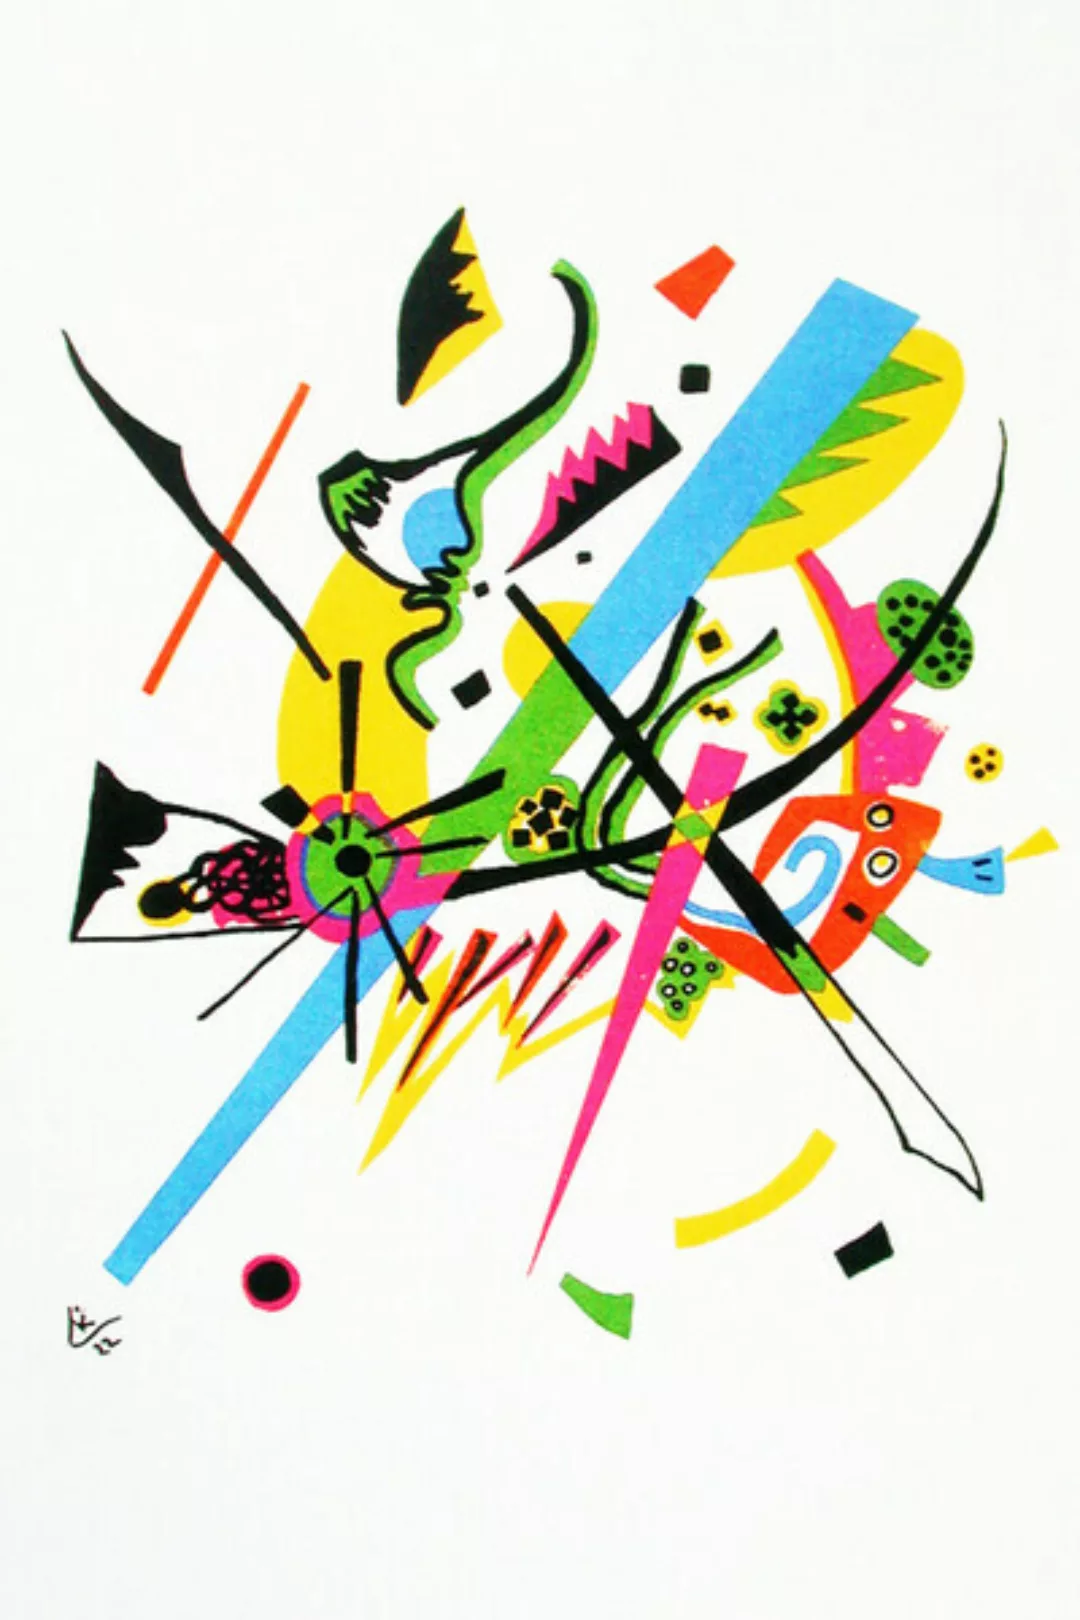 Poster / Leinwandbild - Kandinsky günstig online kaufen